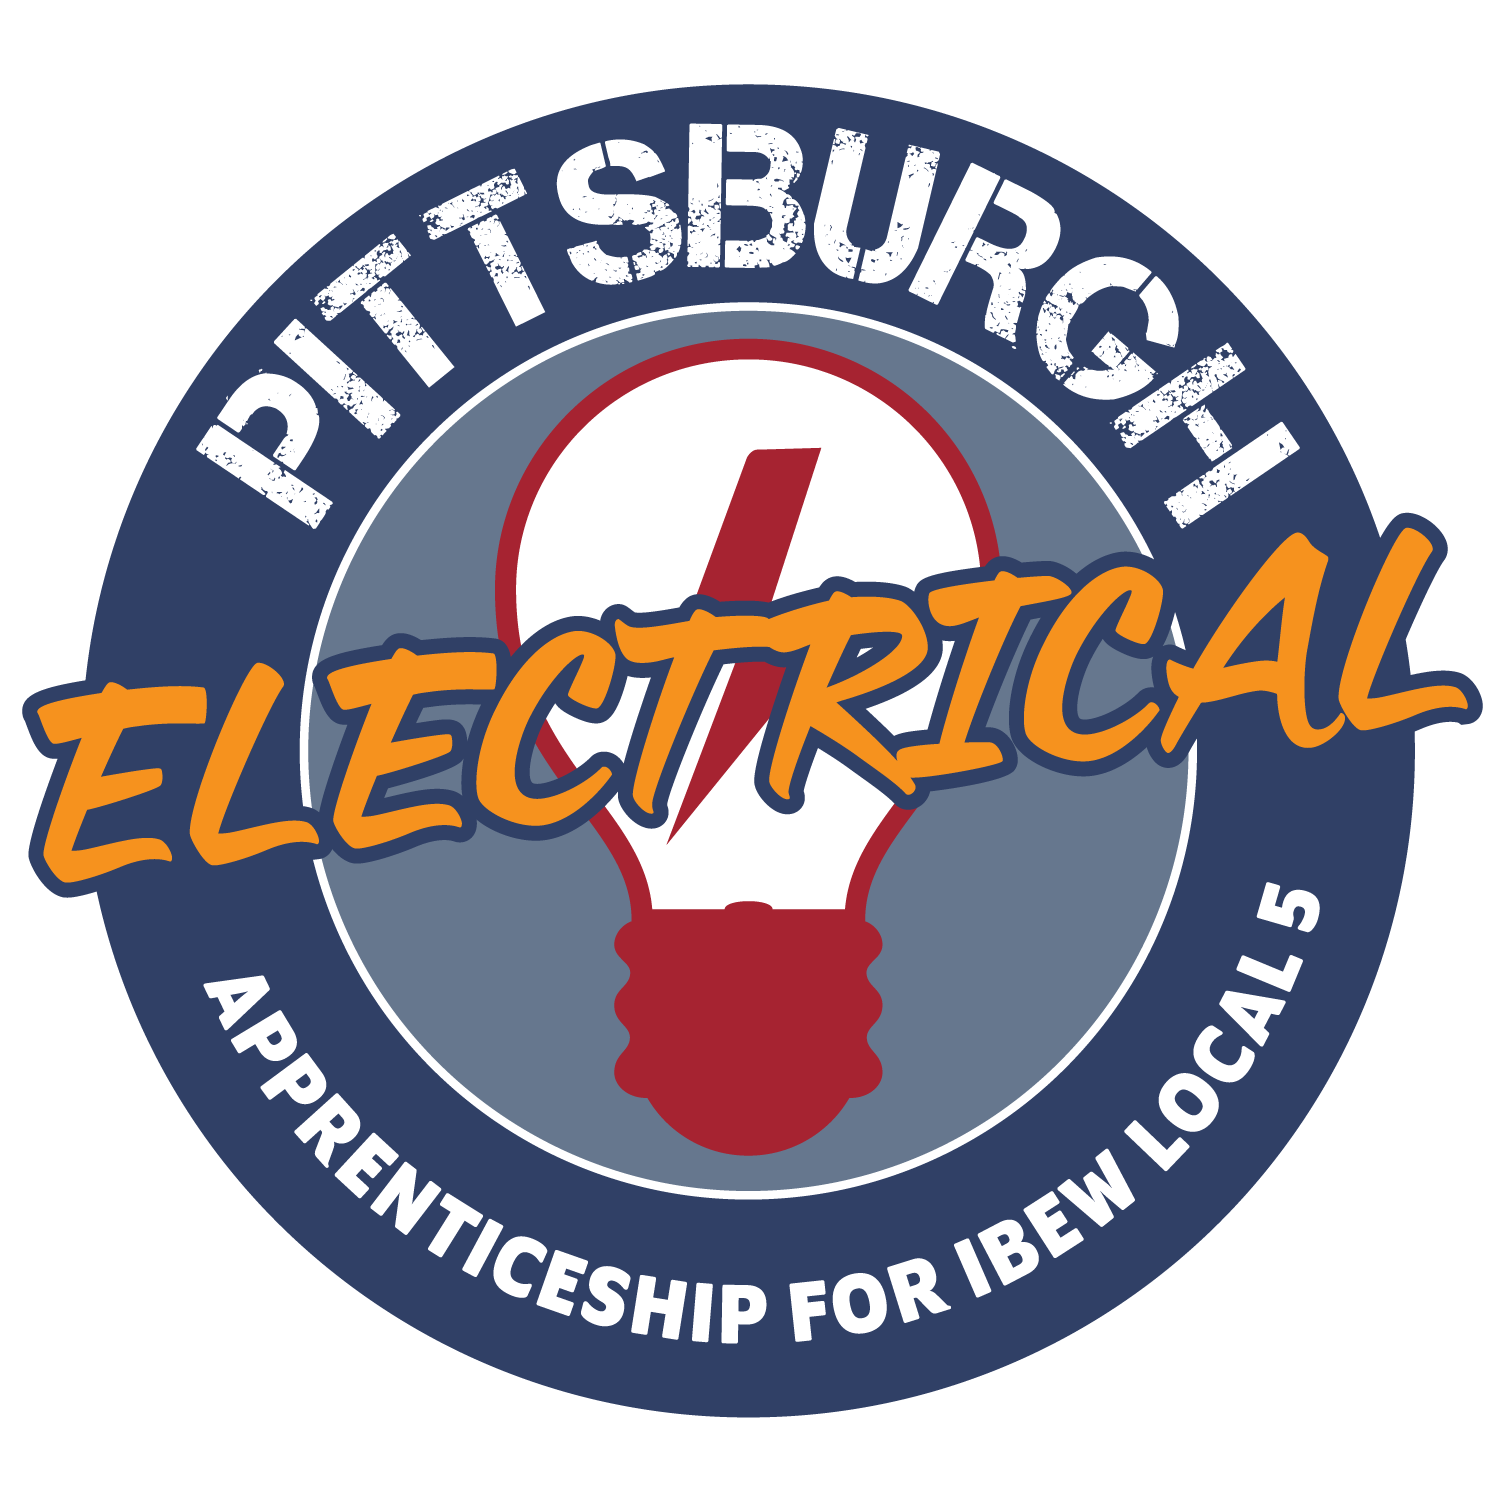 Pittsburgh Electrical JATC